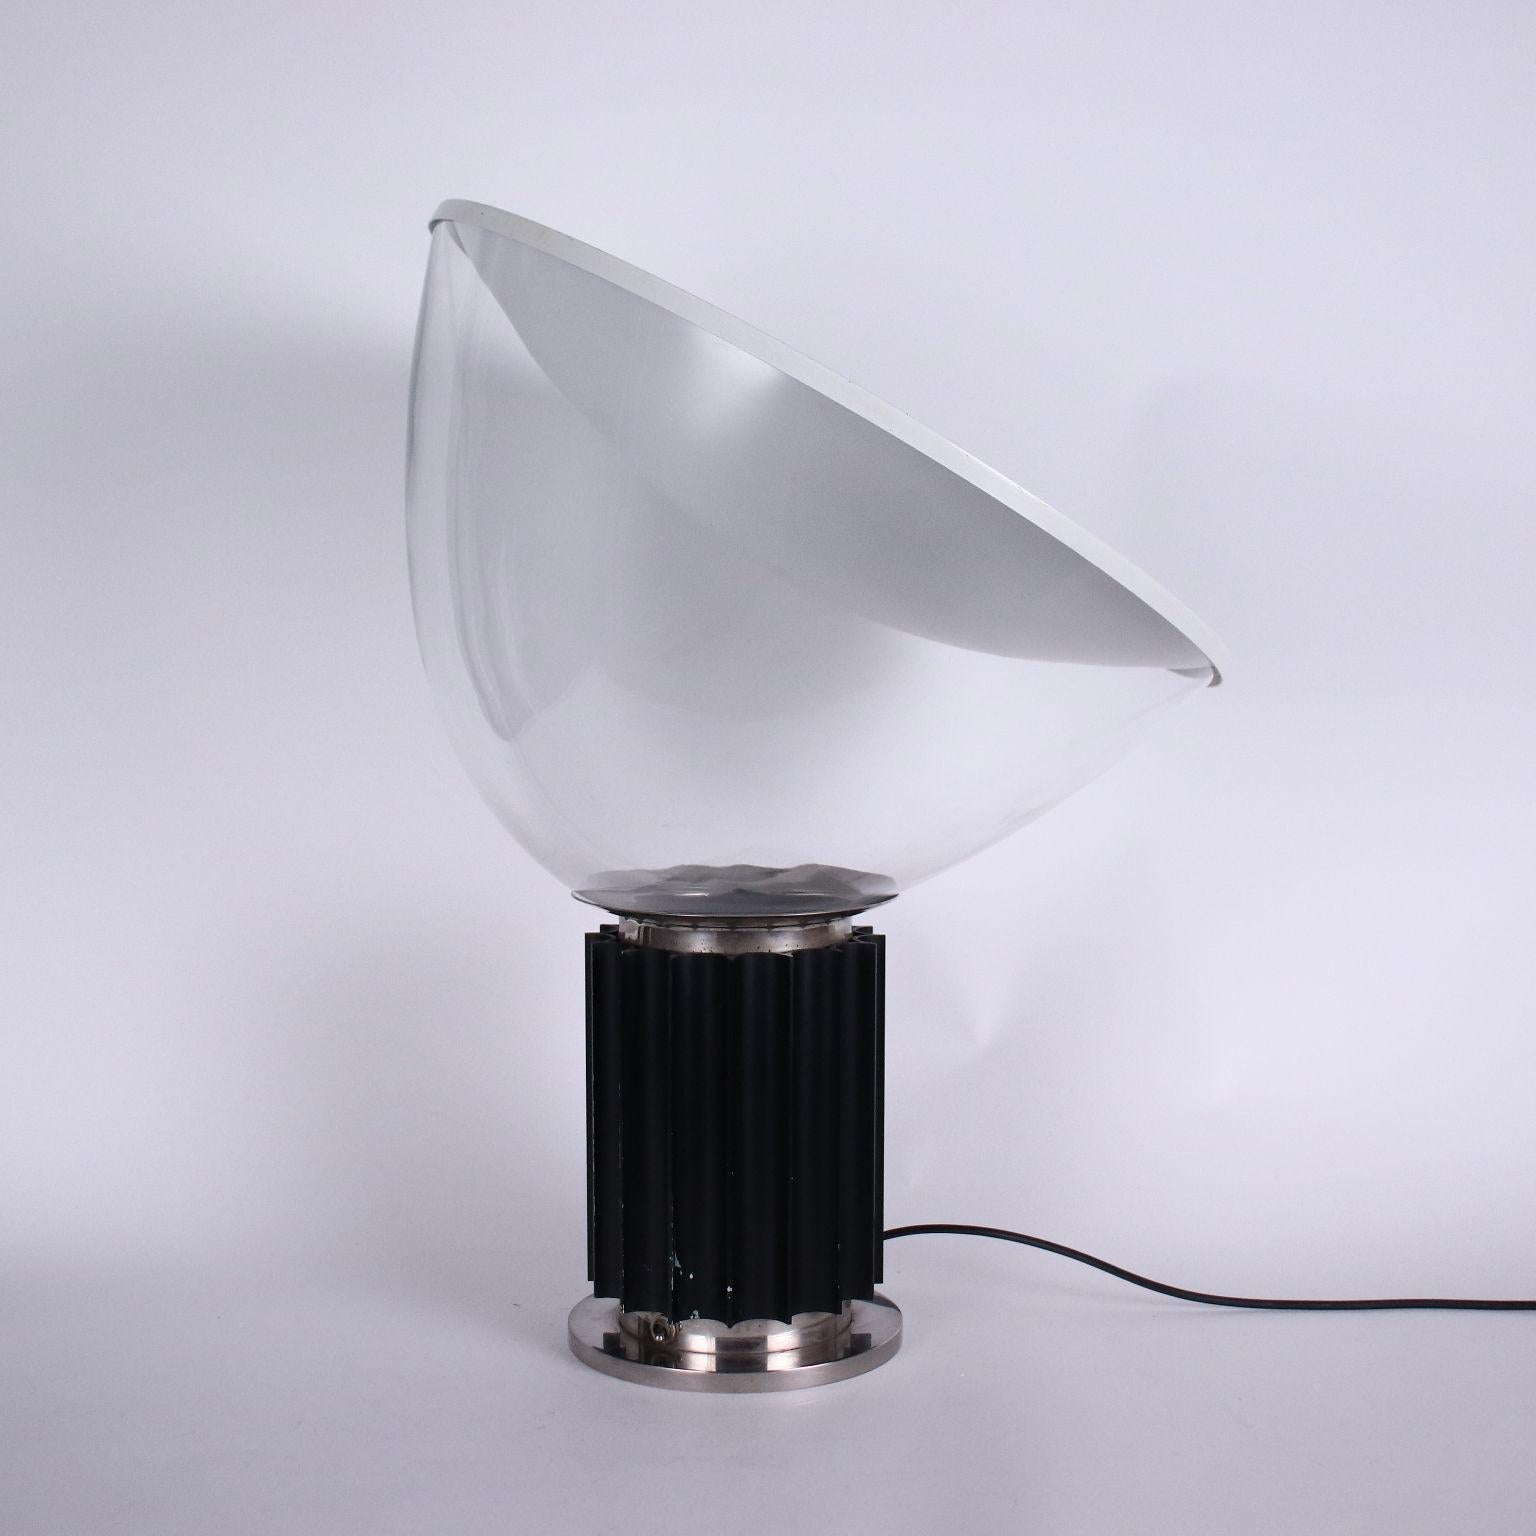 Mid-20th Century Taccia Lamp by Achille and Pier Giacomo Castiglioni for Flos 1960s